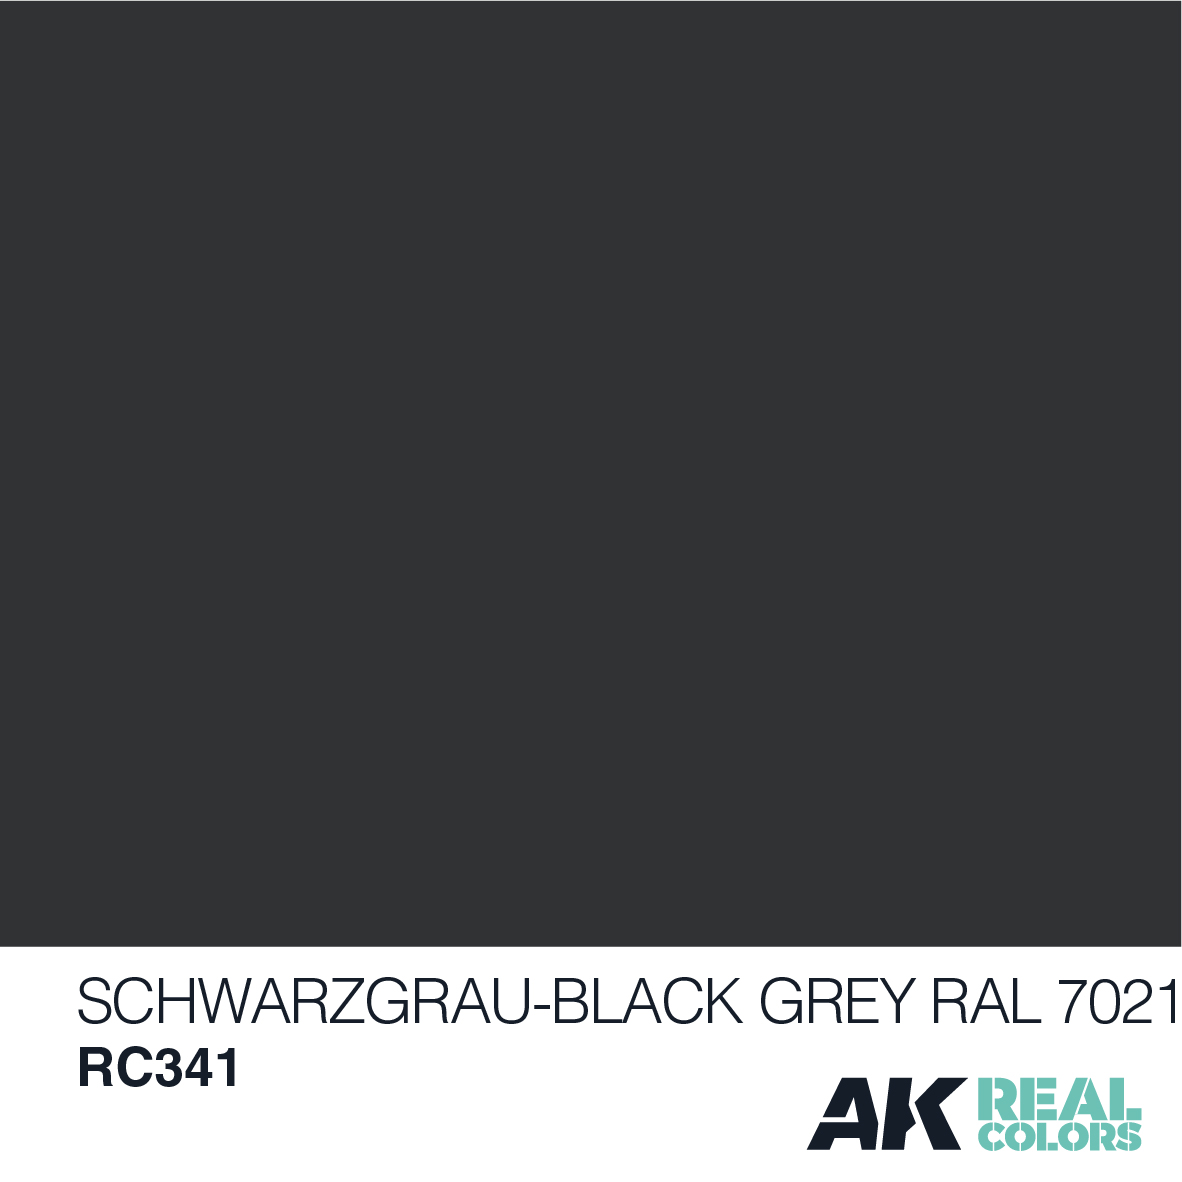 SCHWARZGRAU-BLACK GREY RAL 7021